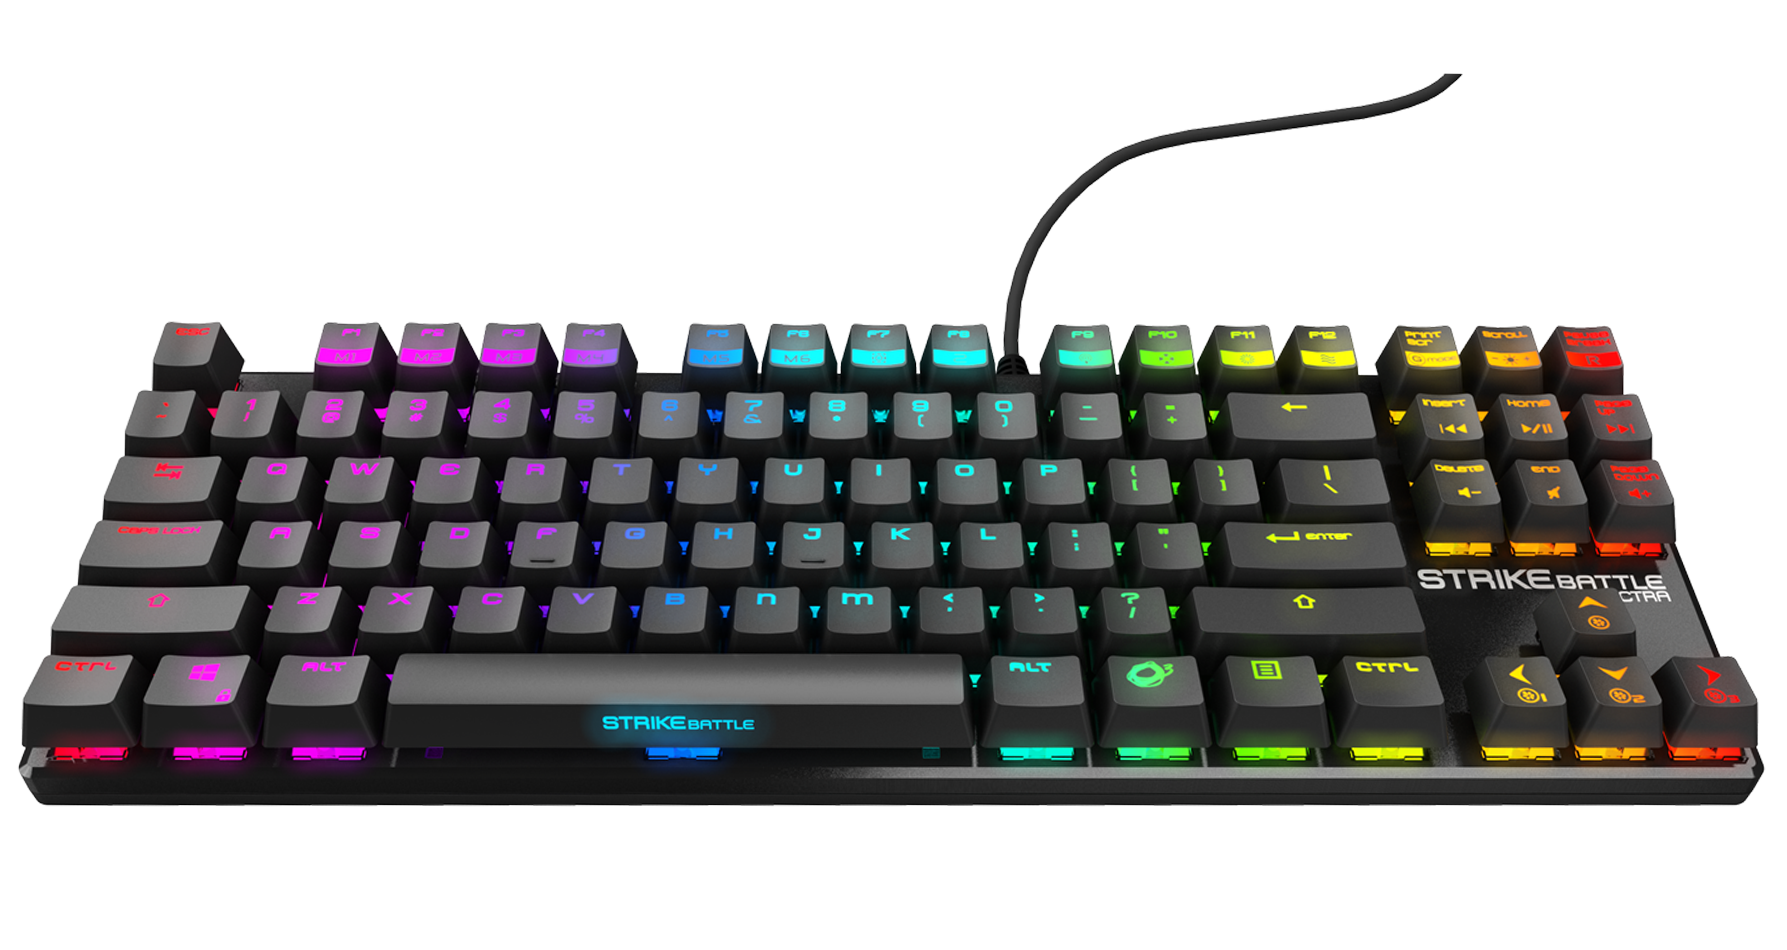 Mechanical keyboard con 16.8 millones de colores cuztomizables.